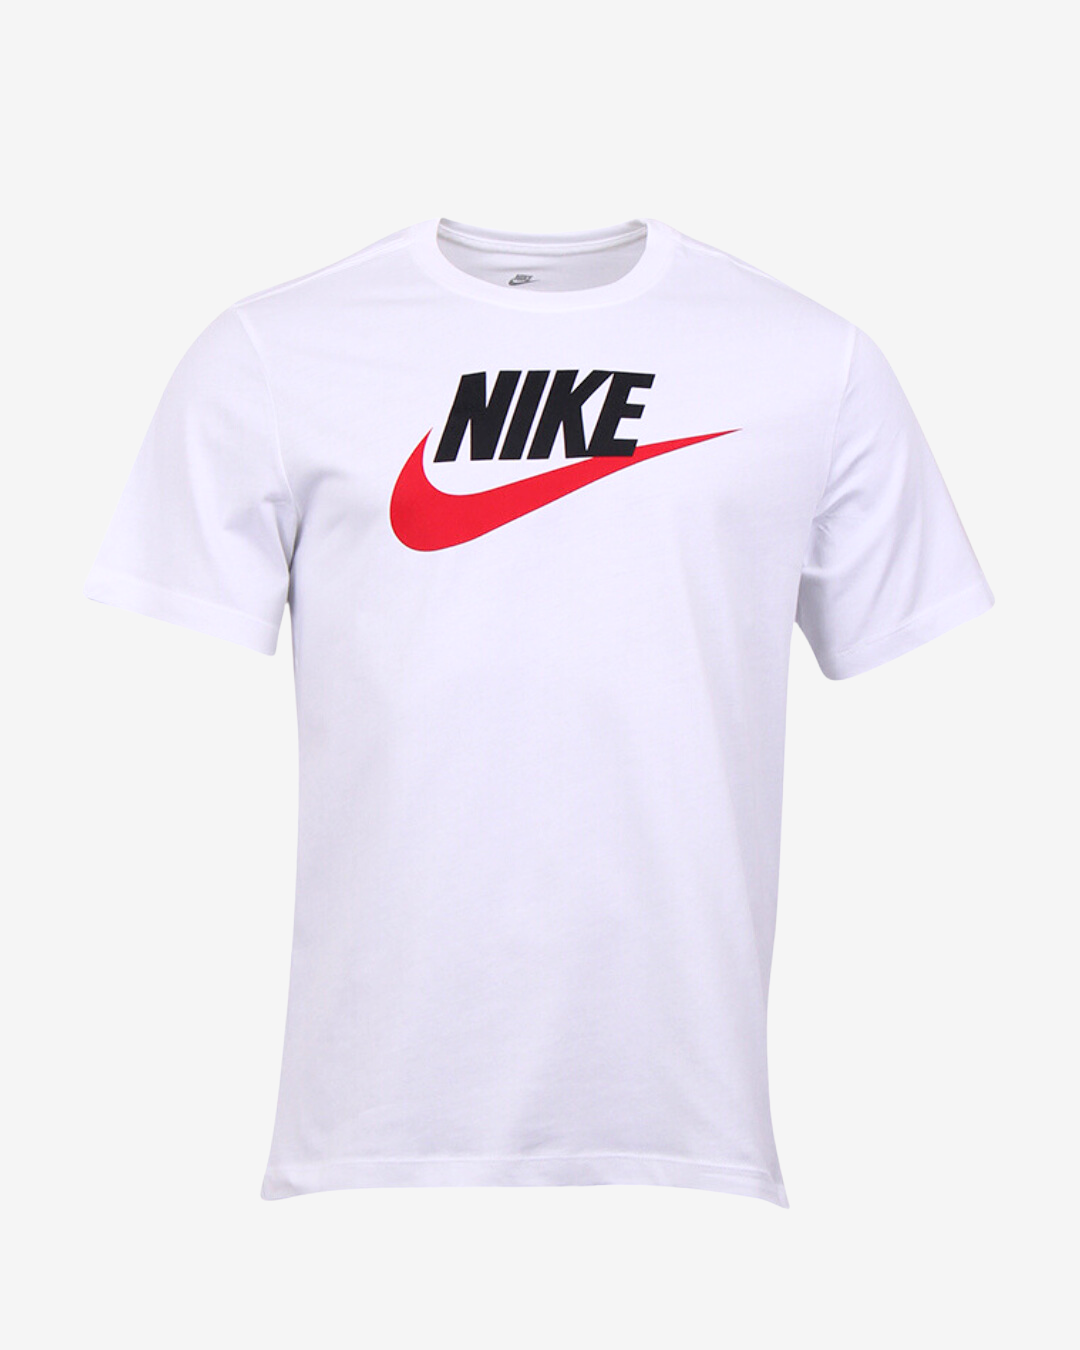 Nike Icon futura t-shirt - Hvid / Rød - Str. L - Modish.dk